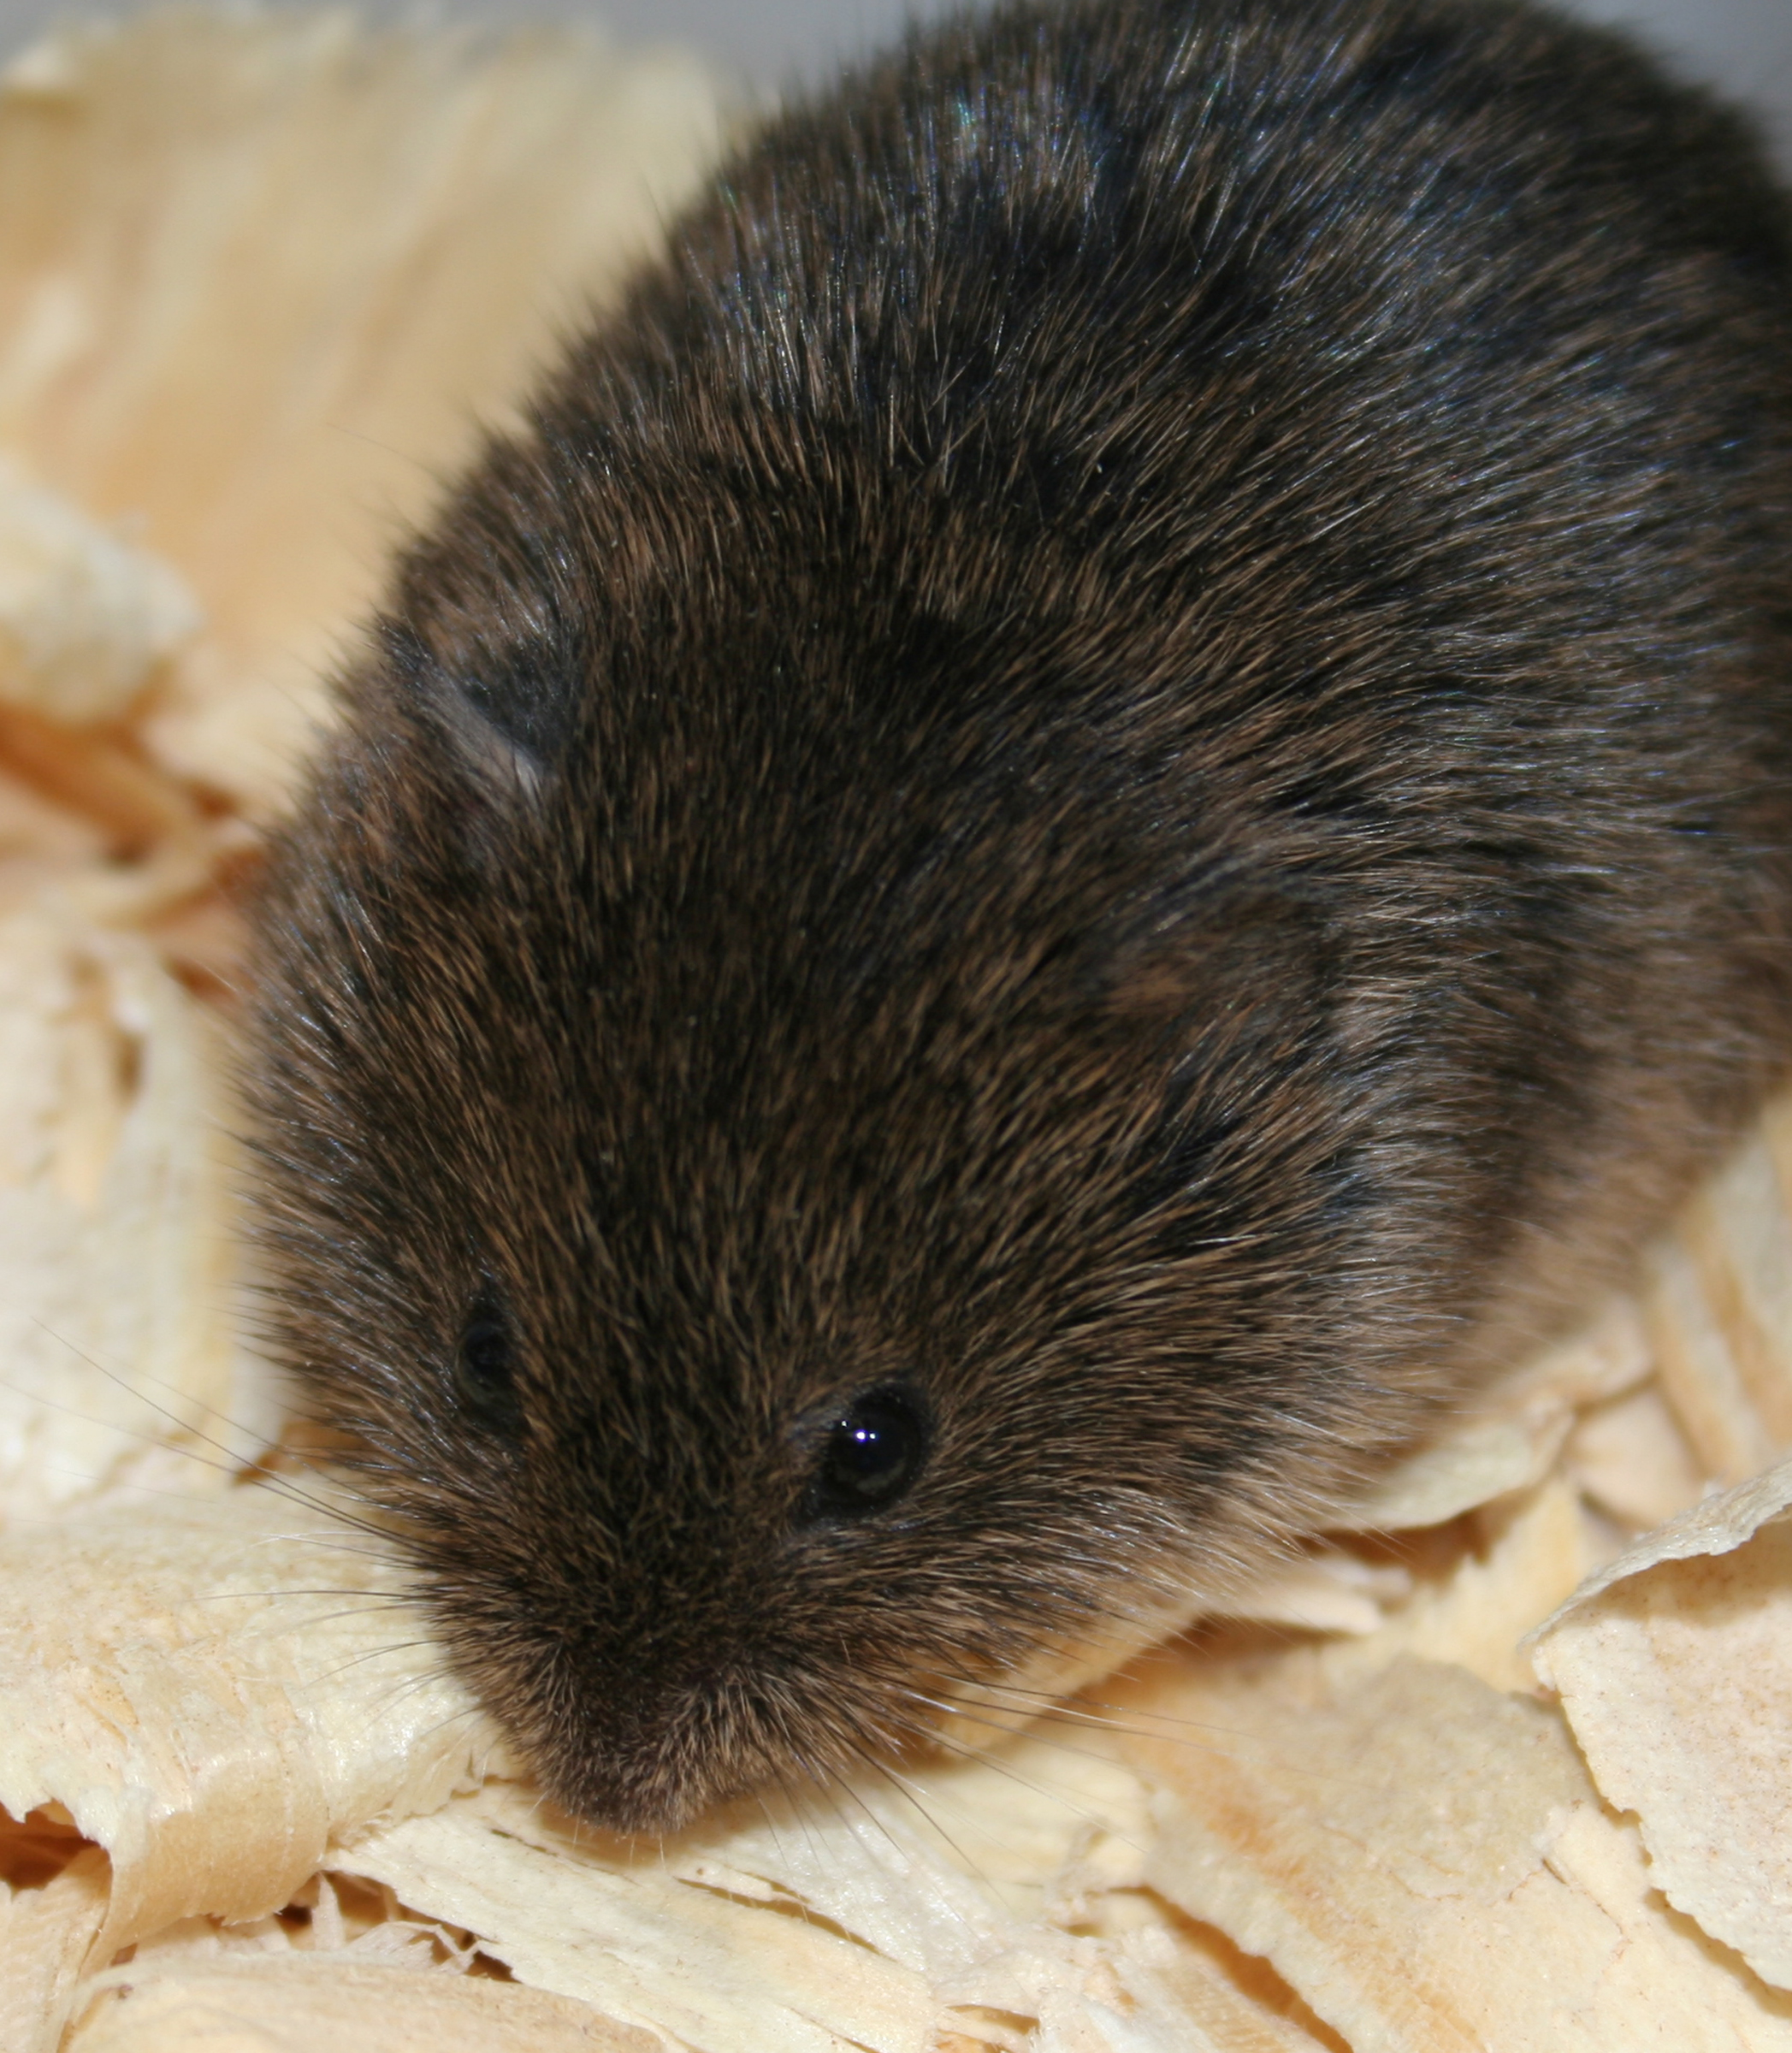 Rodent's bizarre traits deepen mystery of genetics, evolution